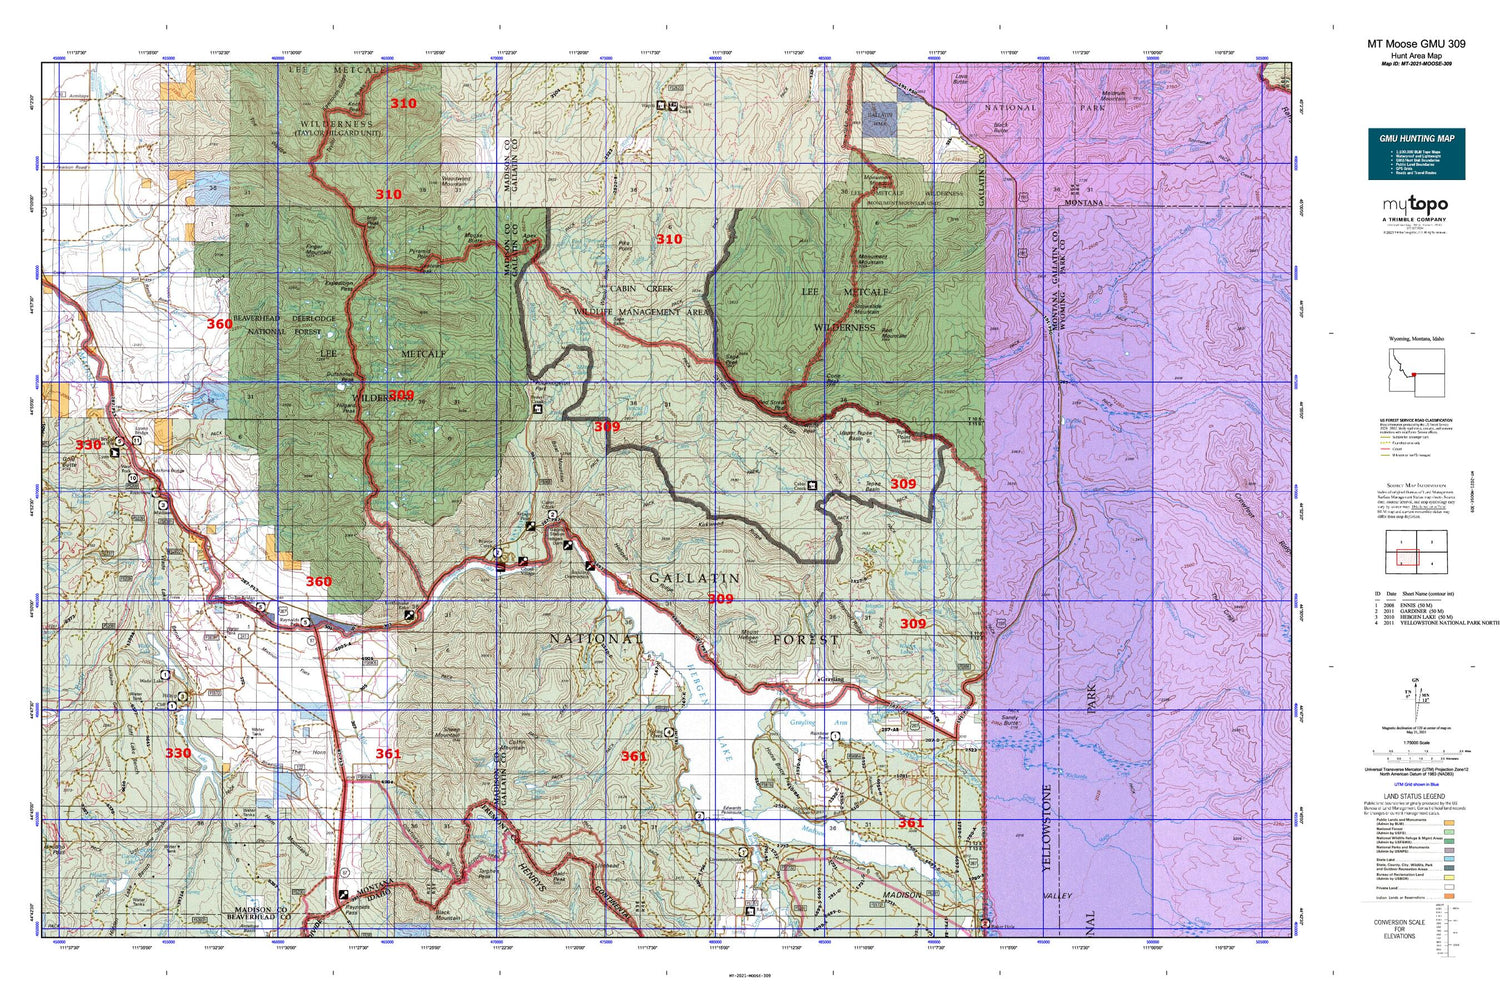 Montana Moose GMU 309 Map Image